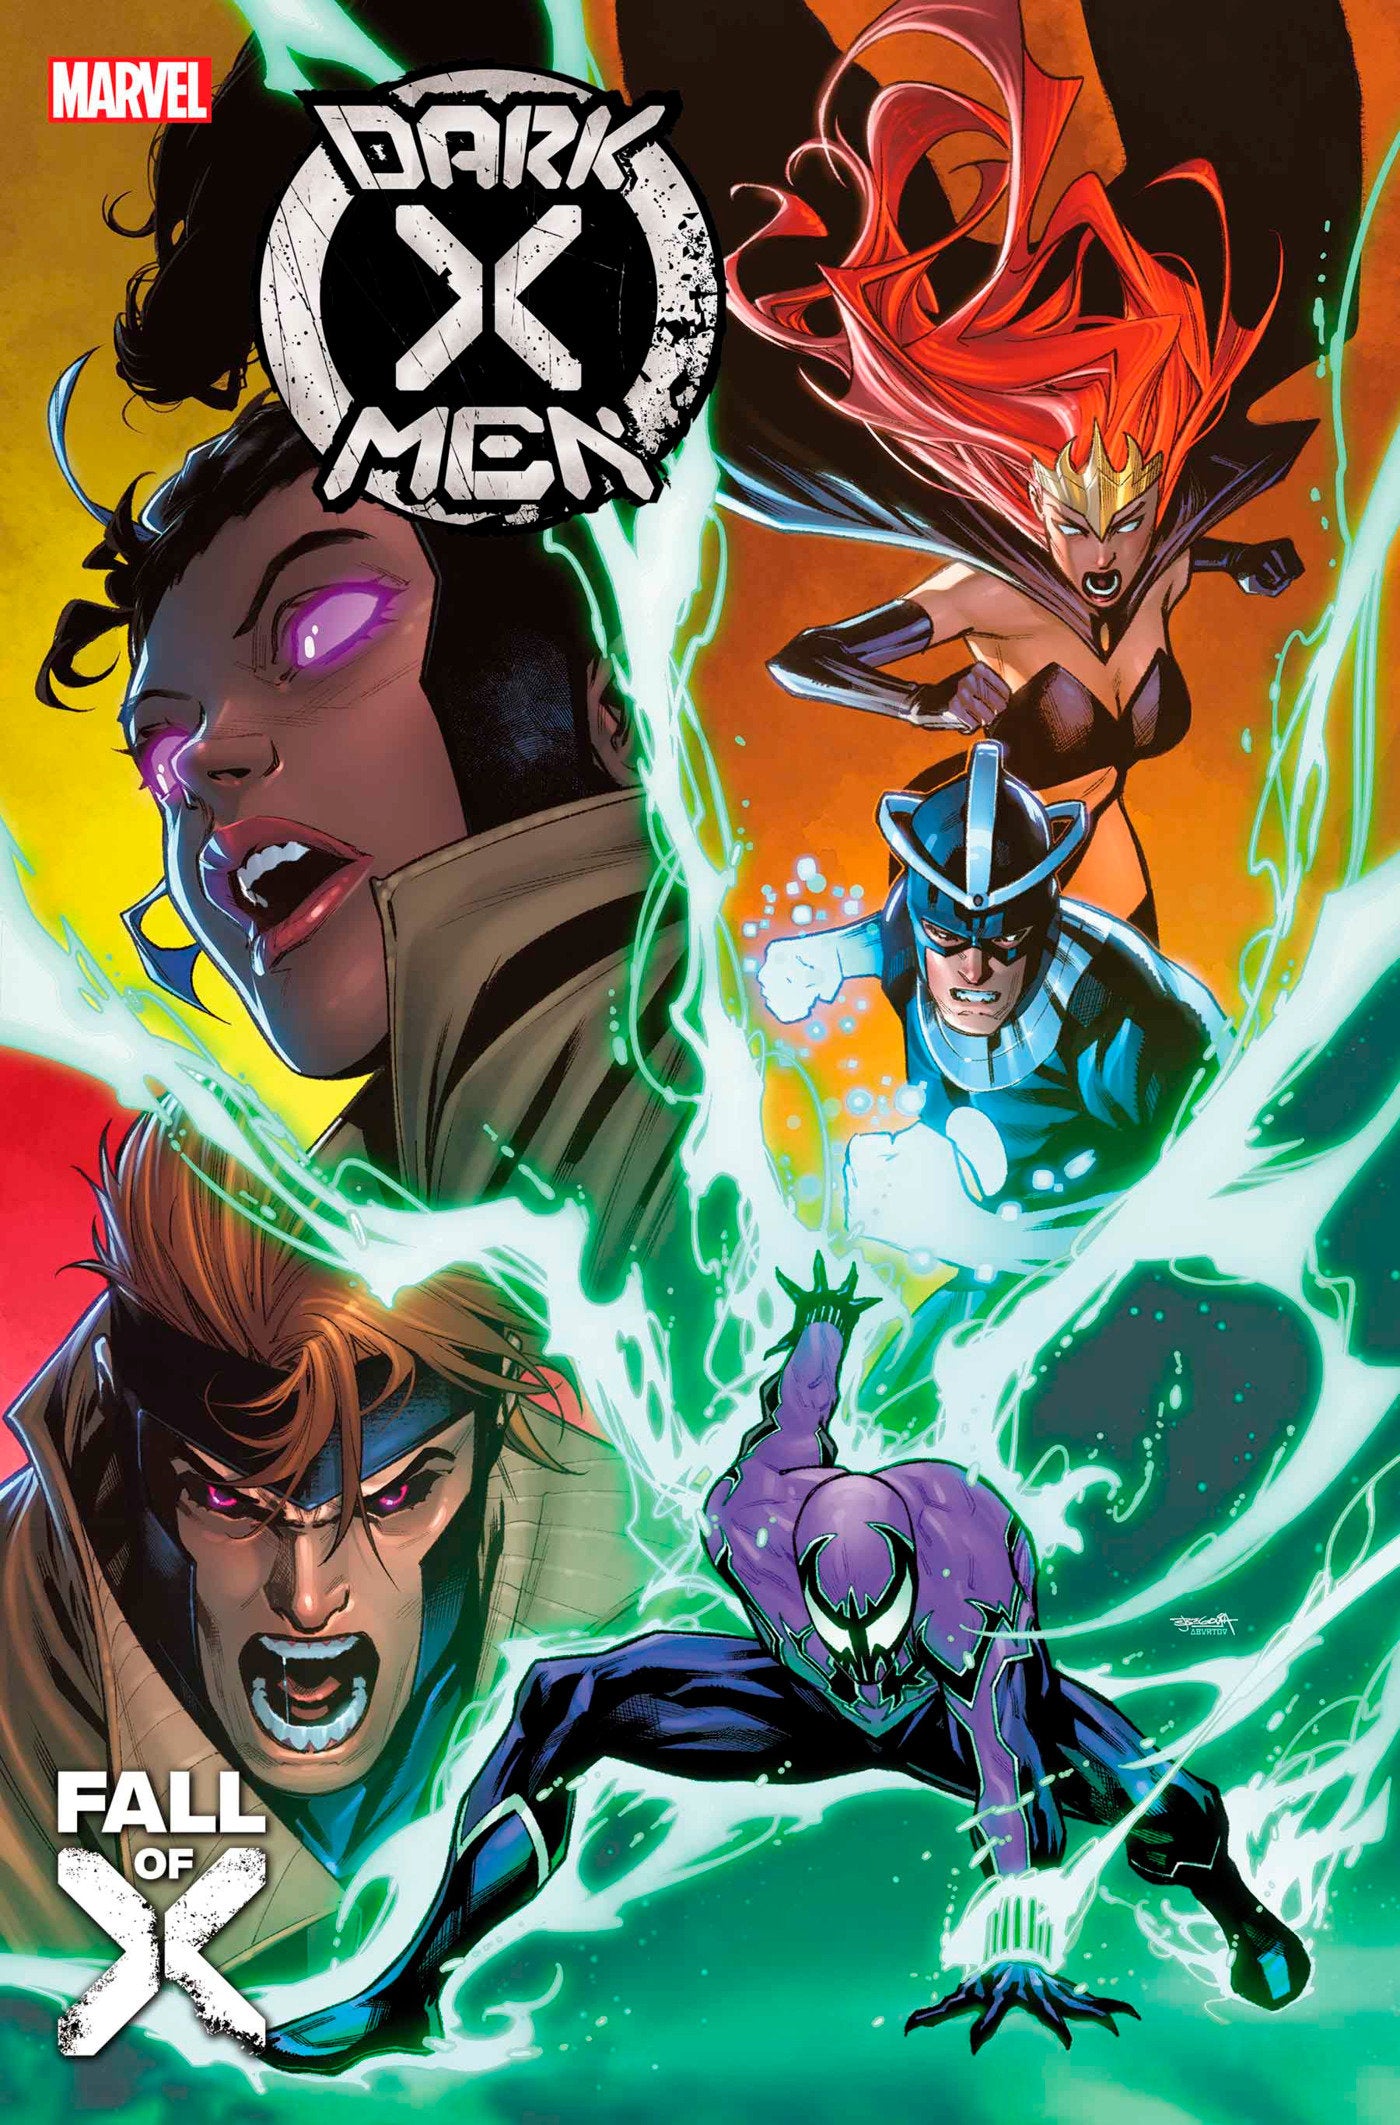 Dark X-Men 4 [Fall] | Game Master's Emporium (The New GME)